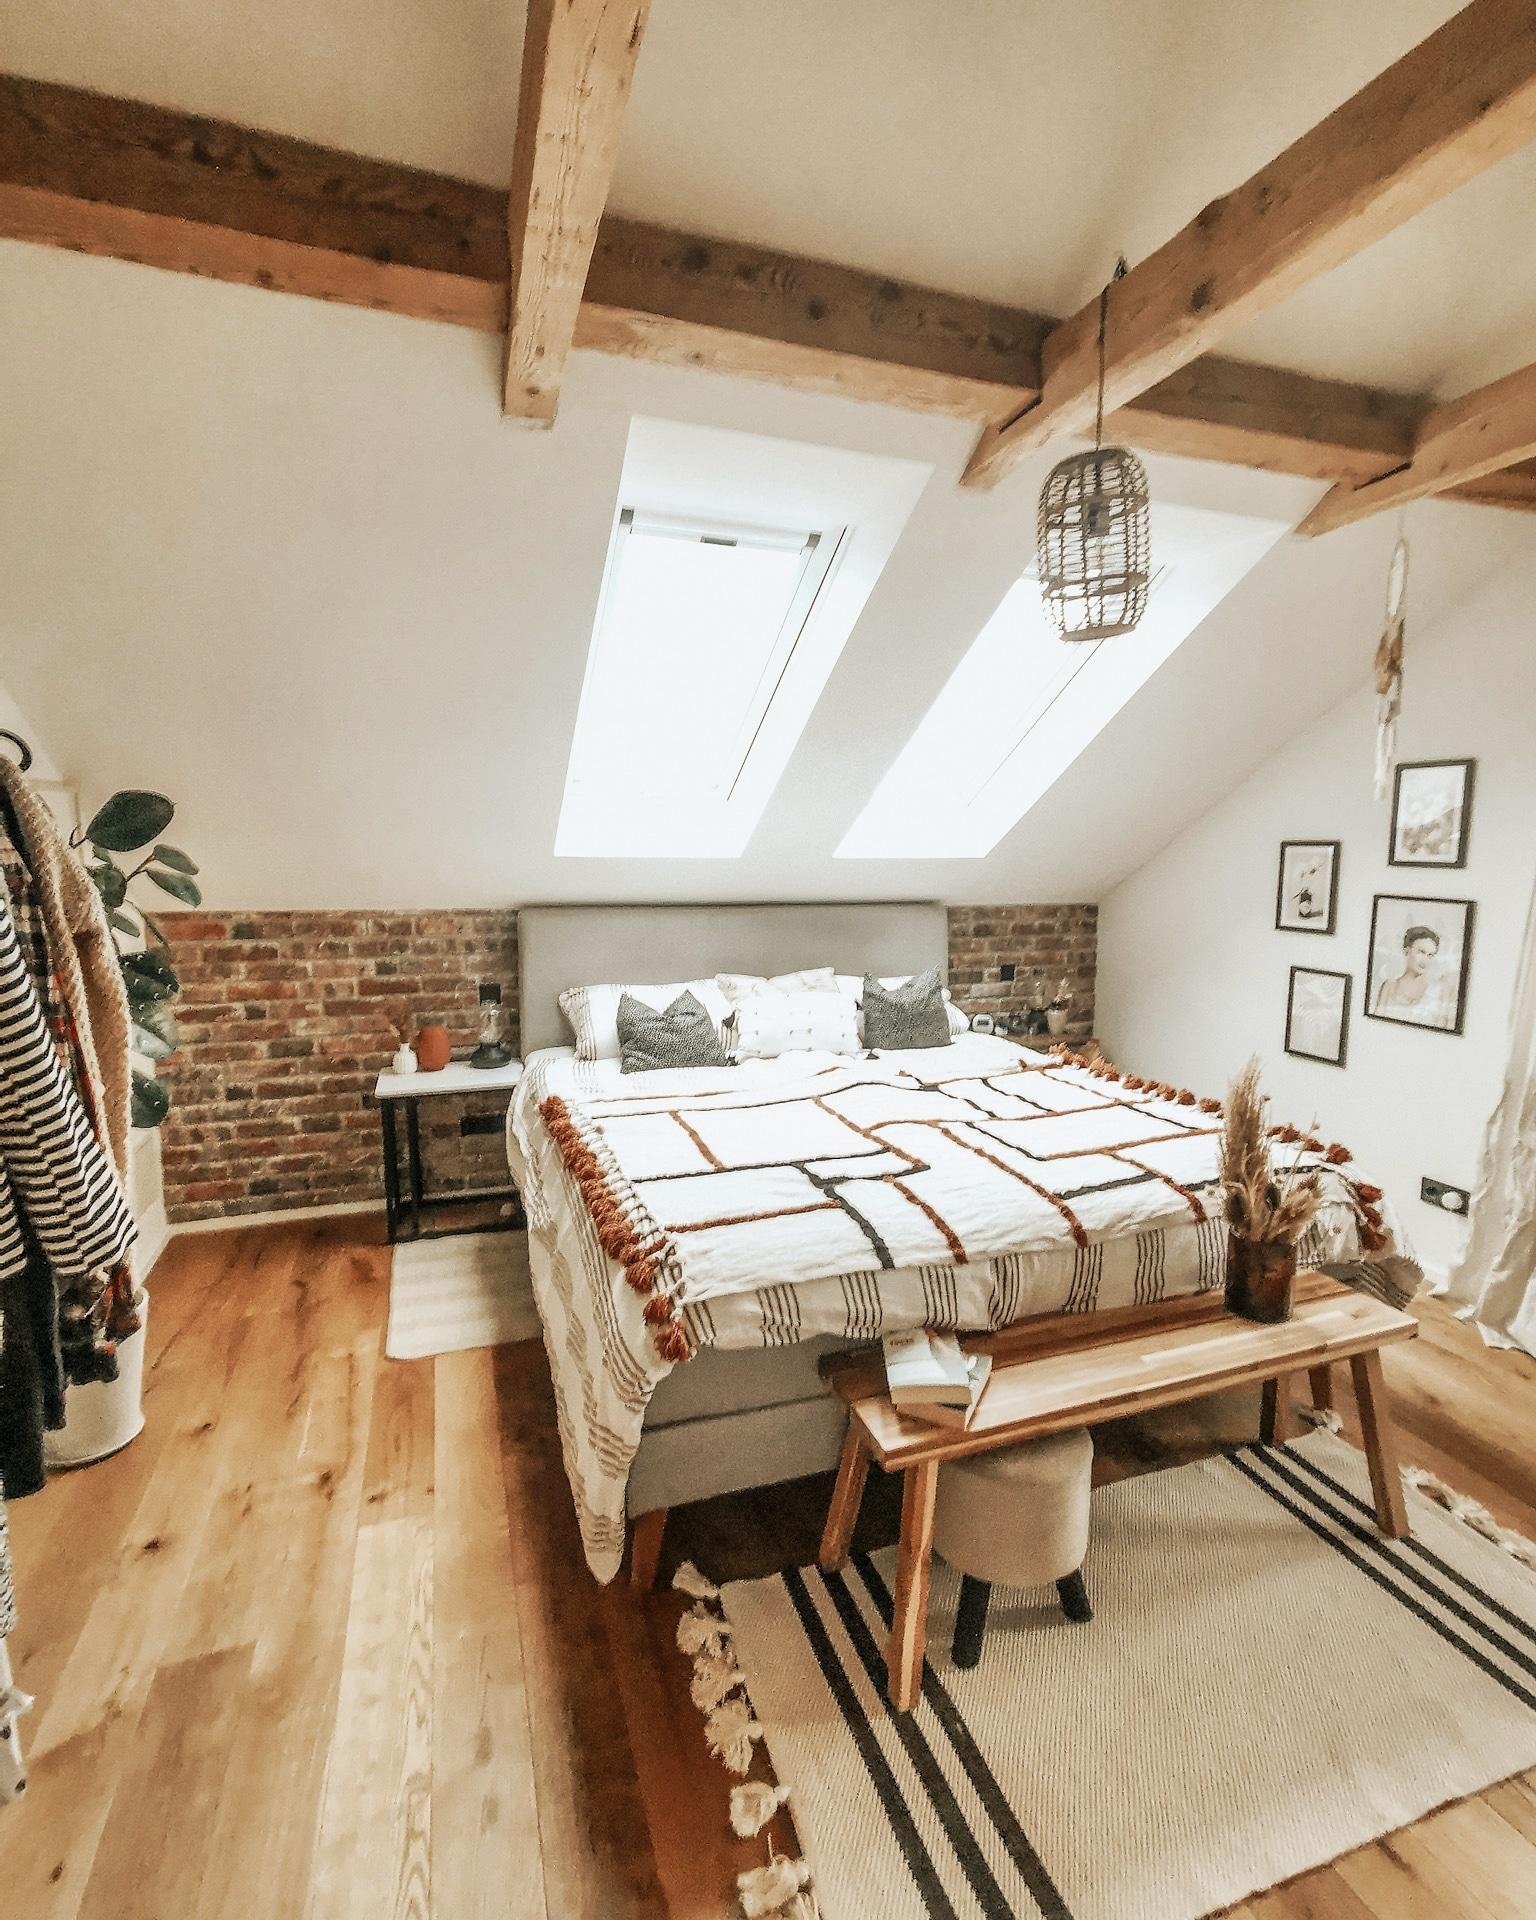 #ziegel #schlafzimmer #cozy #altbau #boho #scandinavianhome #loft #dachgeschoss #bedroom #interiordesign #solebich 